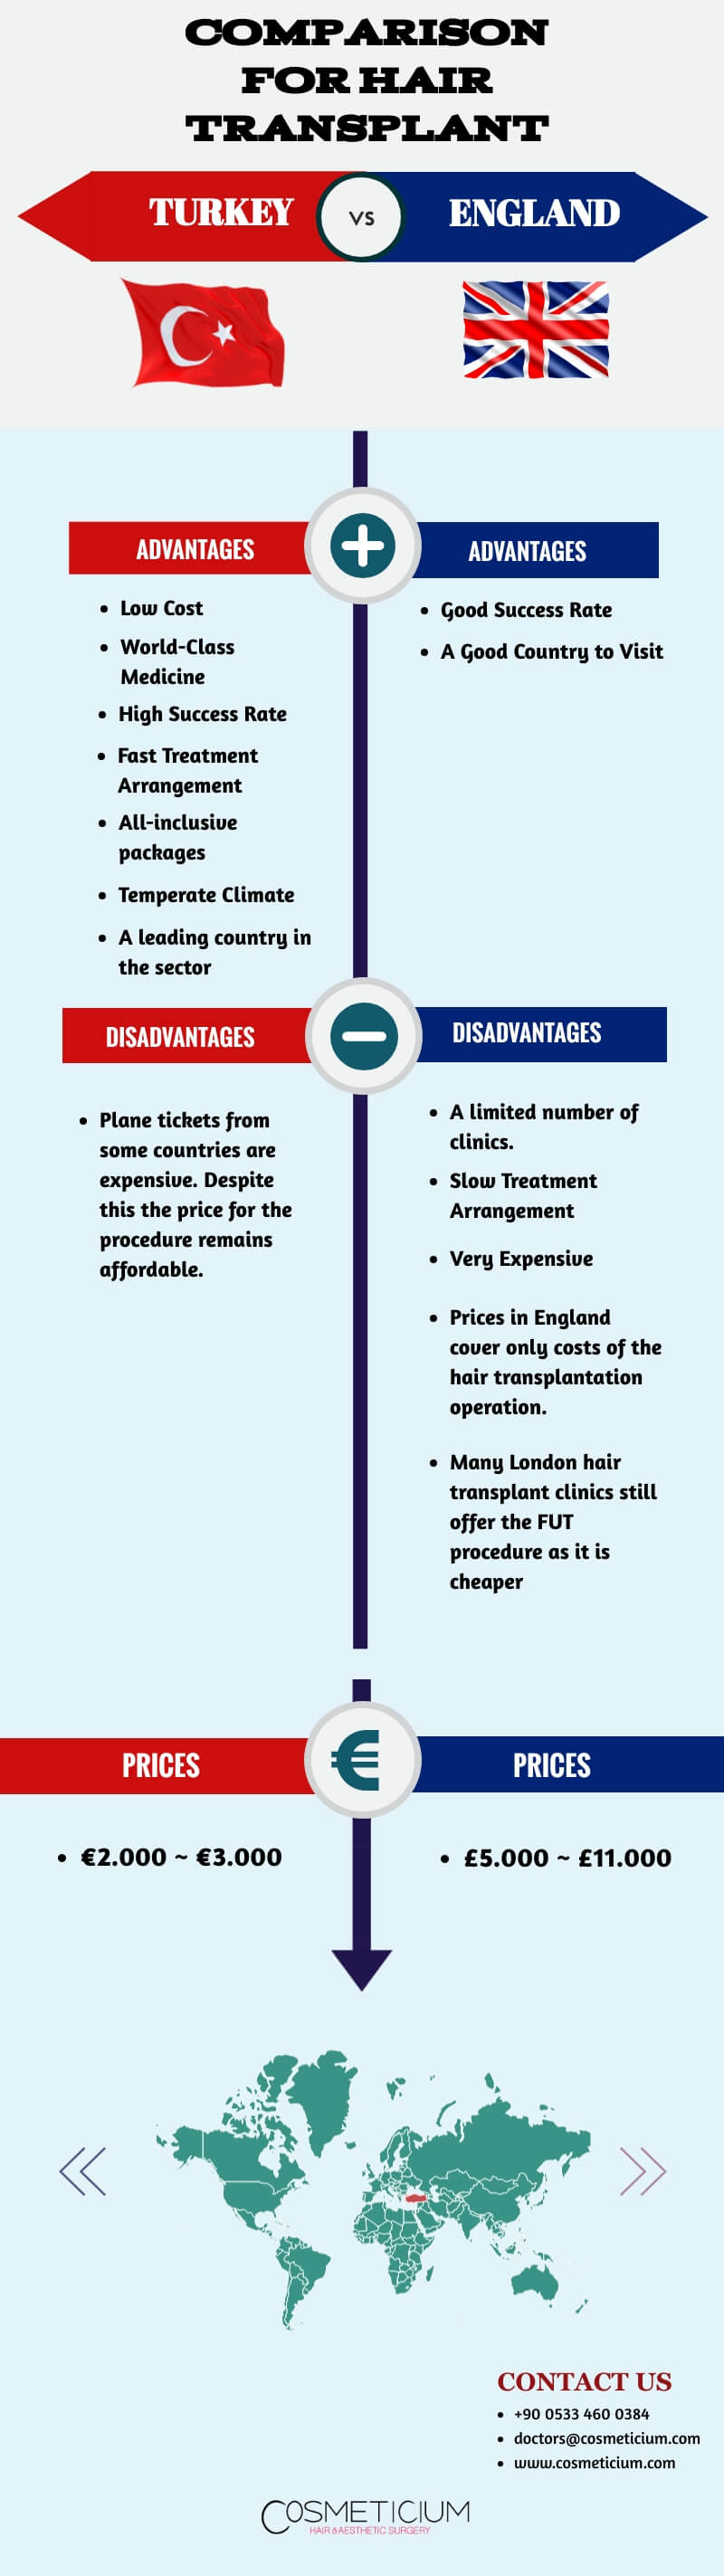 Hair Transplant Comparison Infographic (Turkey vs. England)